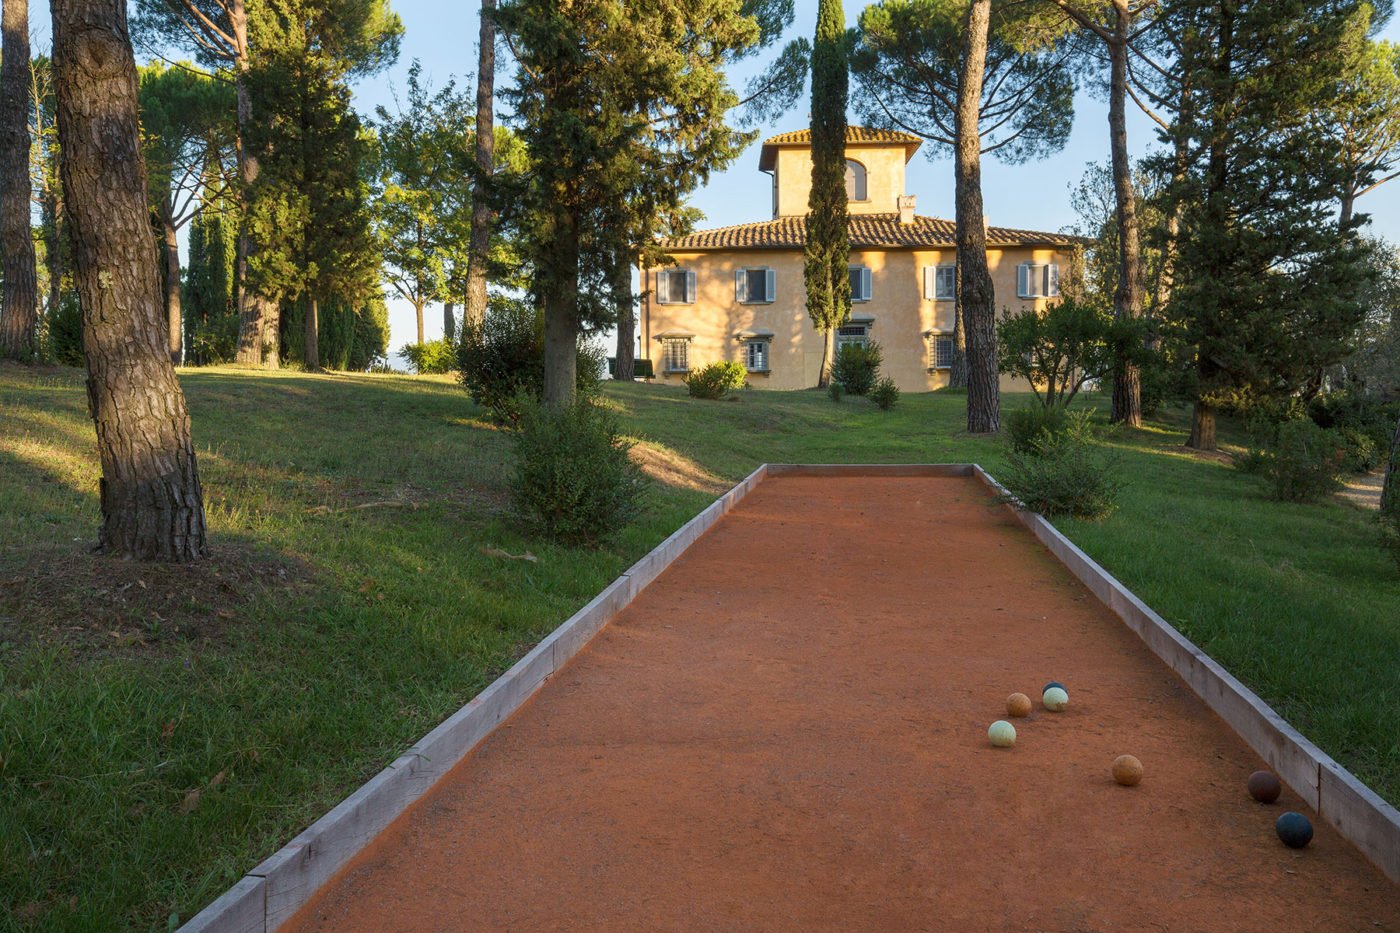 Francis York Villa La Tavernaccia: Luxury Villa Rental Near Florence, Italy 10.jpg